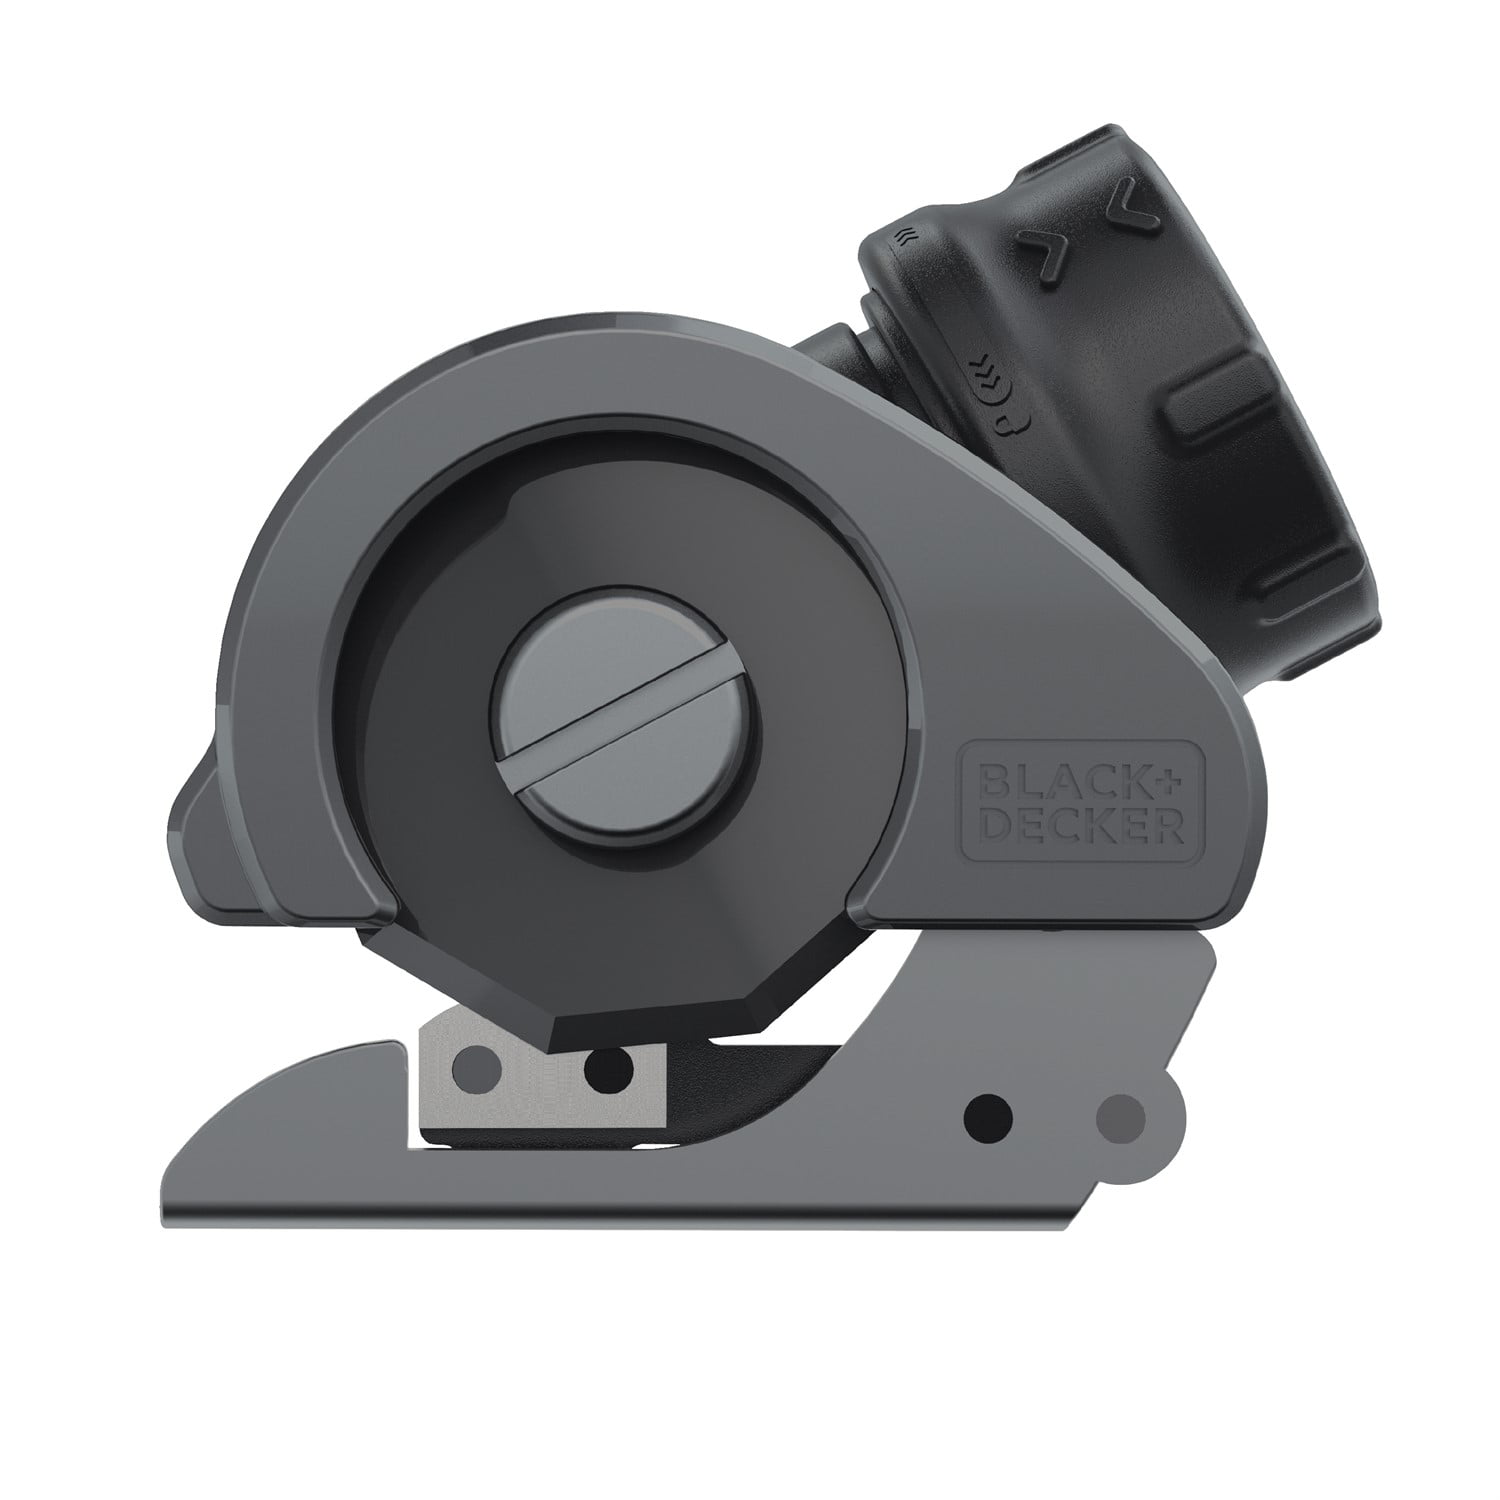 Black & Decker Roto-Bit 4V Max Screwdriver w/ Cutter Head Attachment 